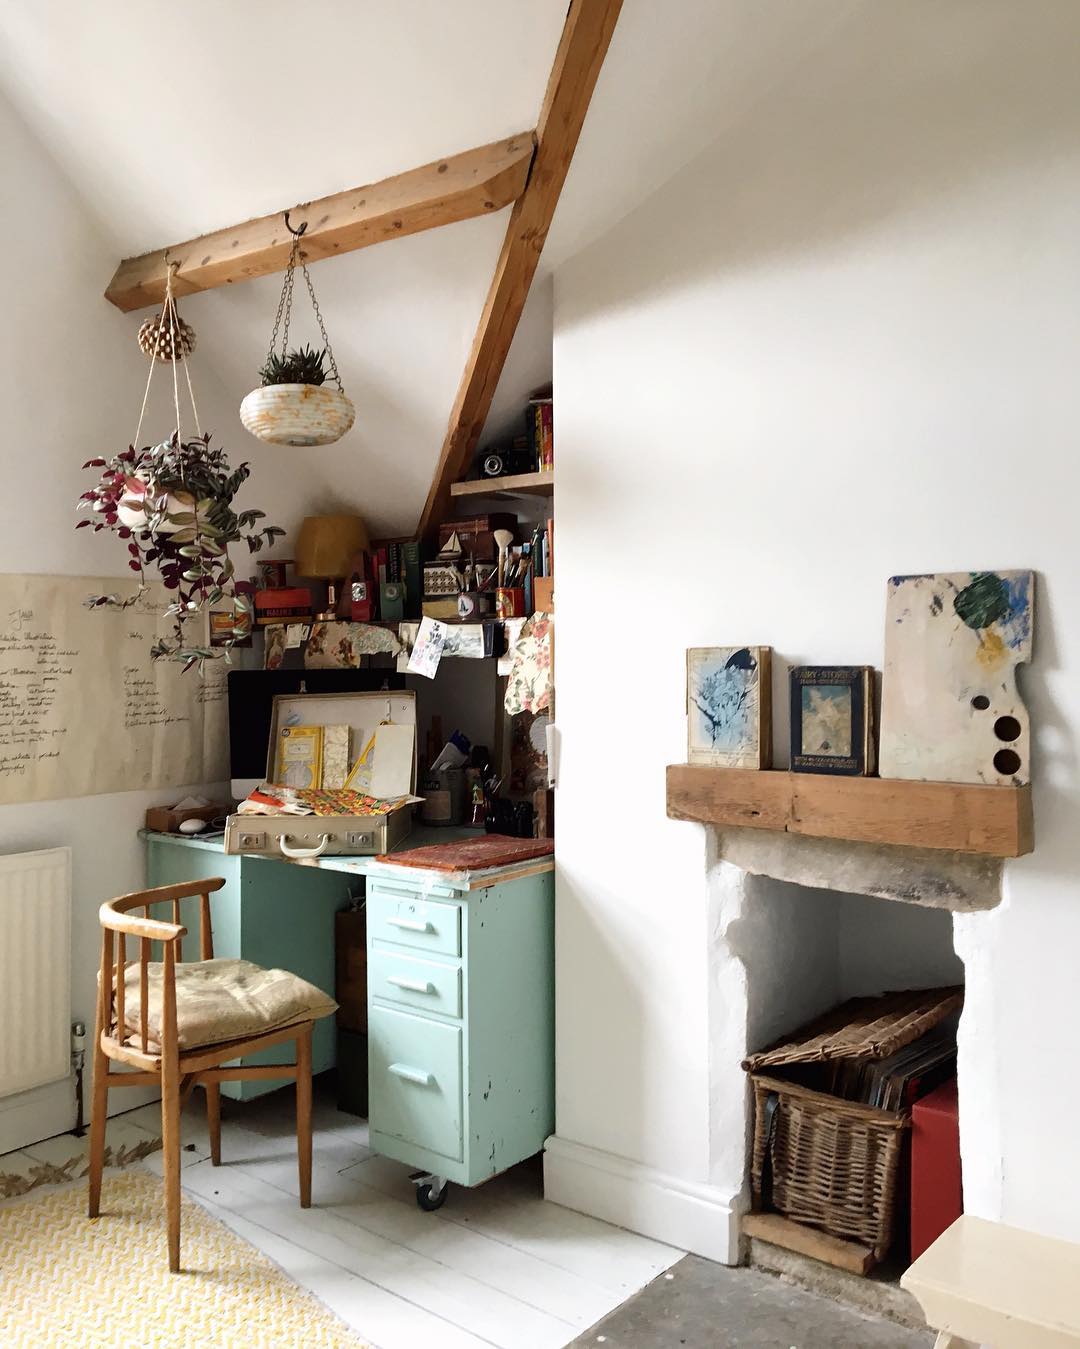 https://www.extraspace.com/blog/wp-content/uploads/2018/06/diy-designing-home-art-studio-where-to-set-up-attic.jpg